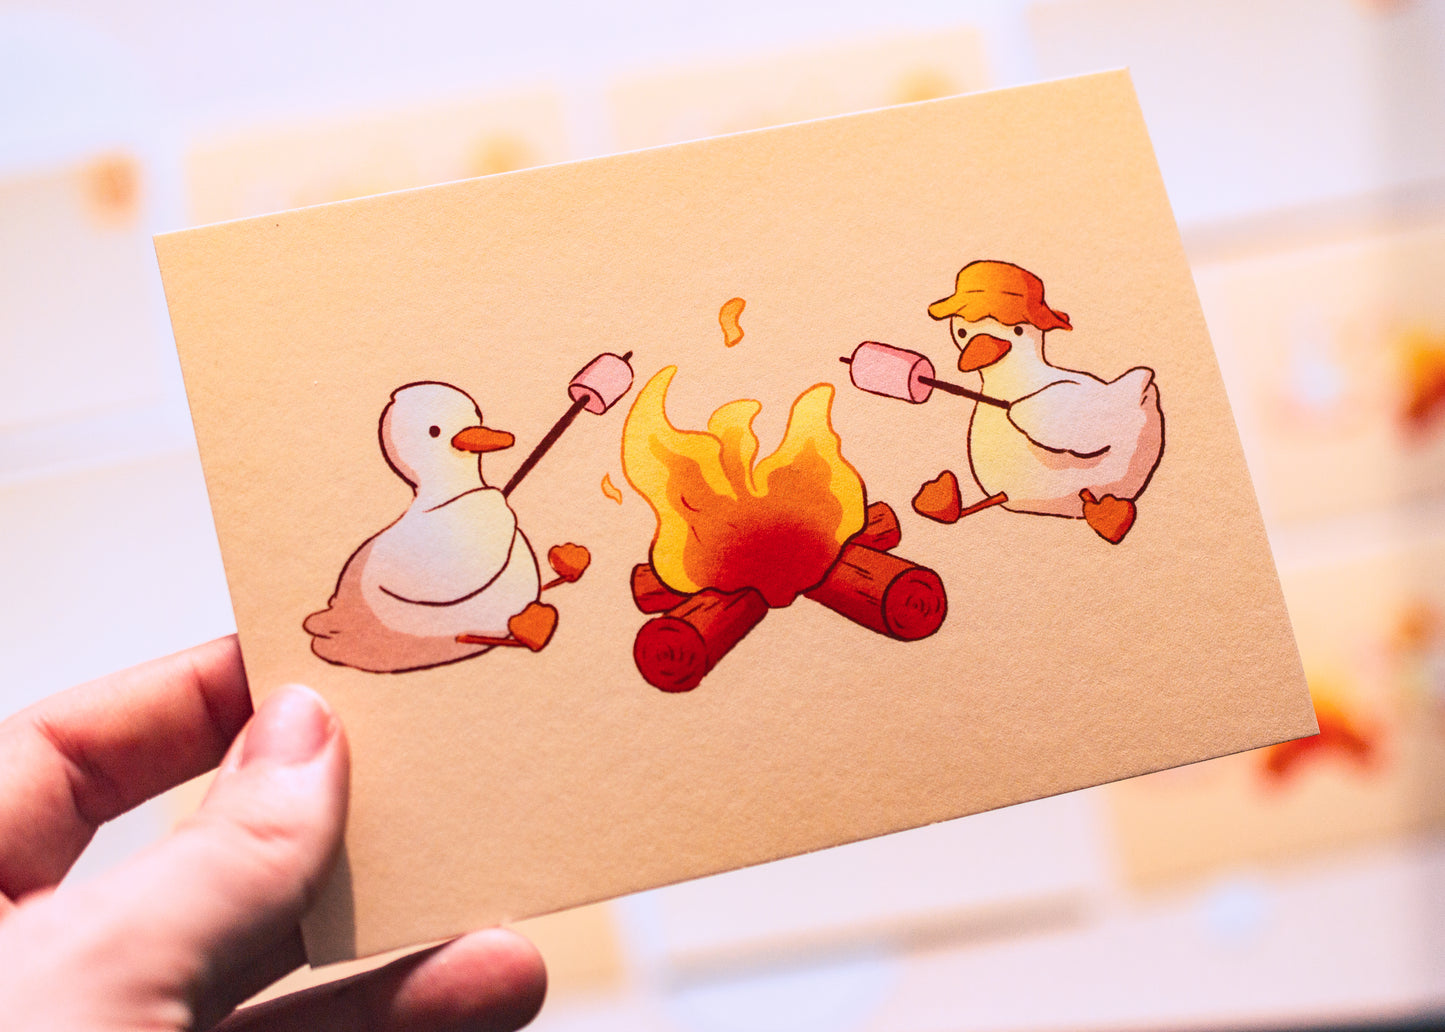 Mini prints - Ducks roasting marshmallows